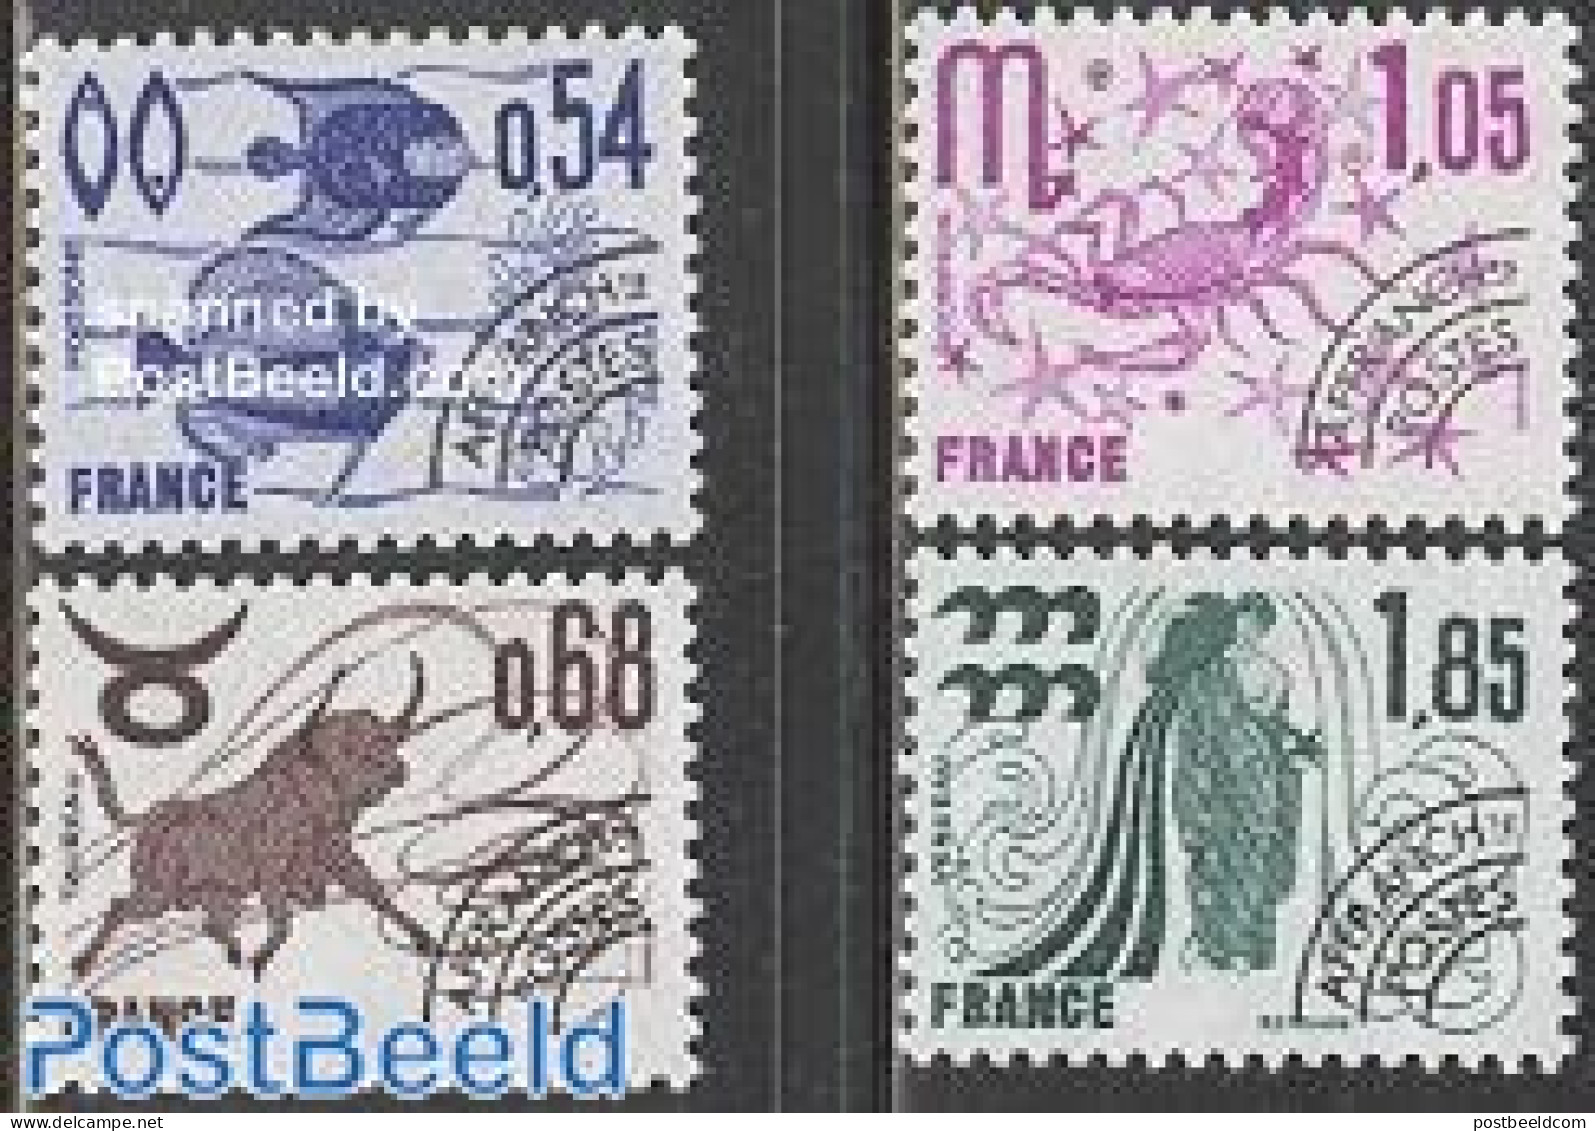 France 1977 Precancels, Astrology 4v, Mint NH, Nature - Science - Fish - Ungebraucht